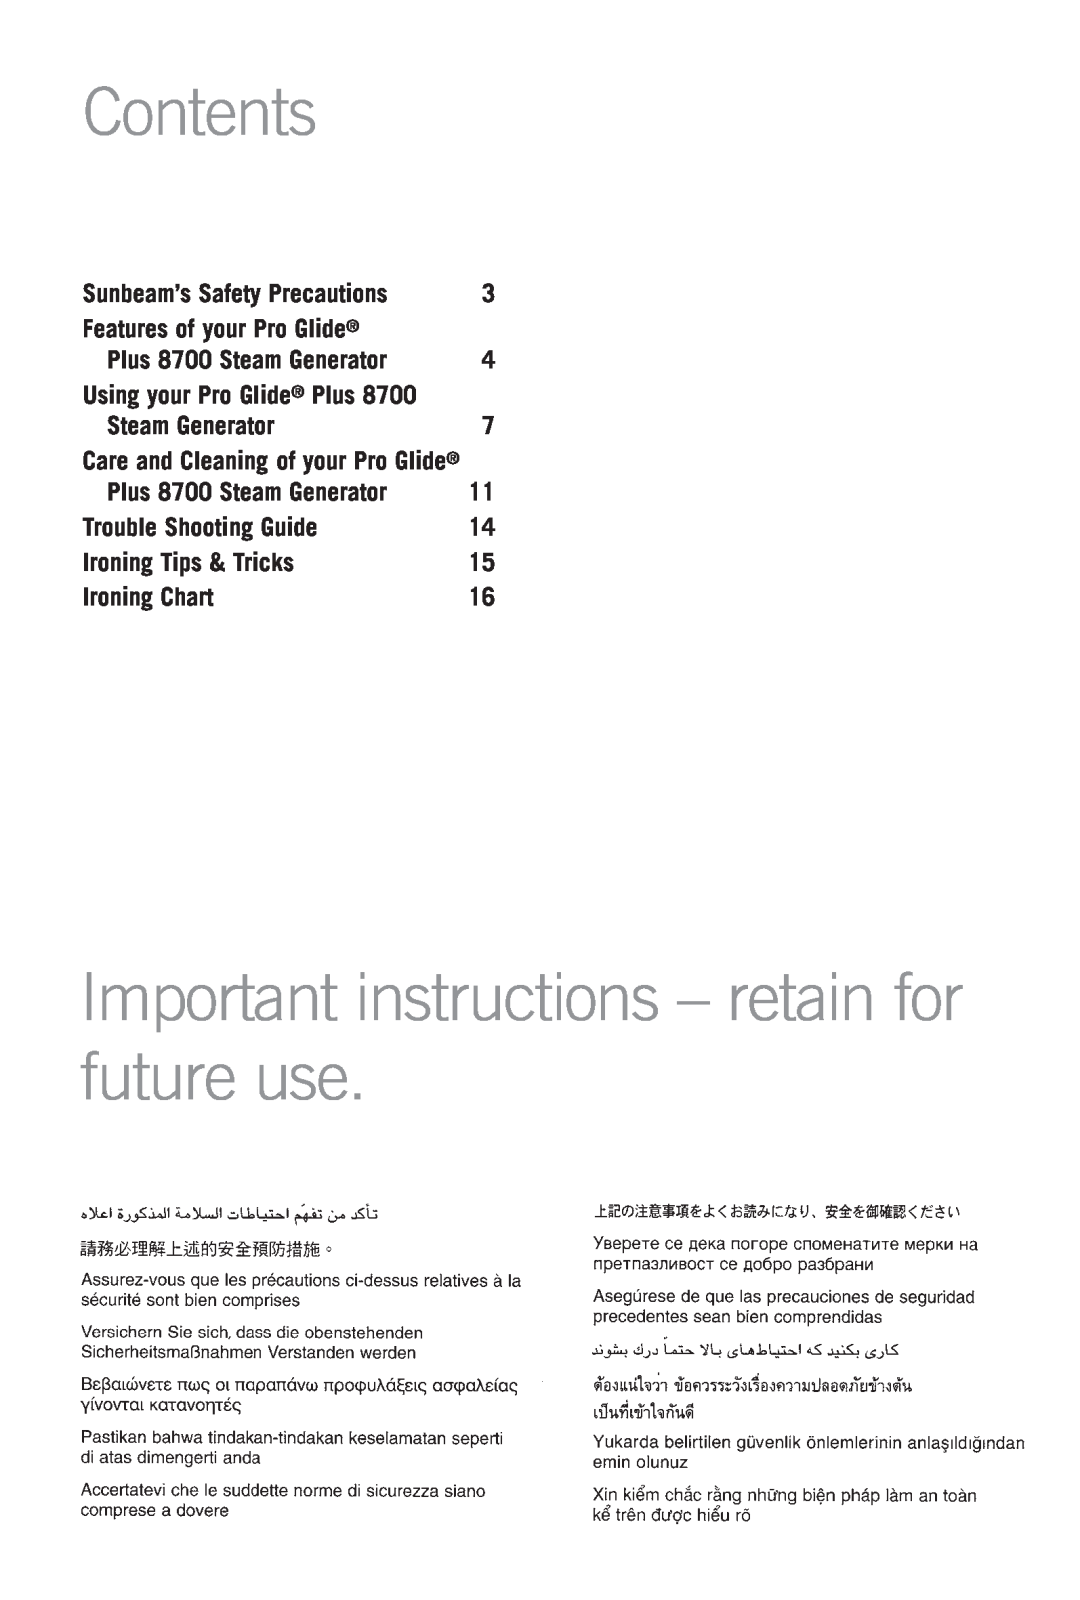 Sunbeam SR8700 Contents, Important instructions - retain for future use, Sunbeam’s Safety Precautions, Steam Generator 